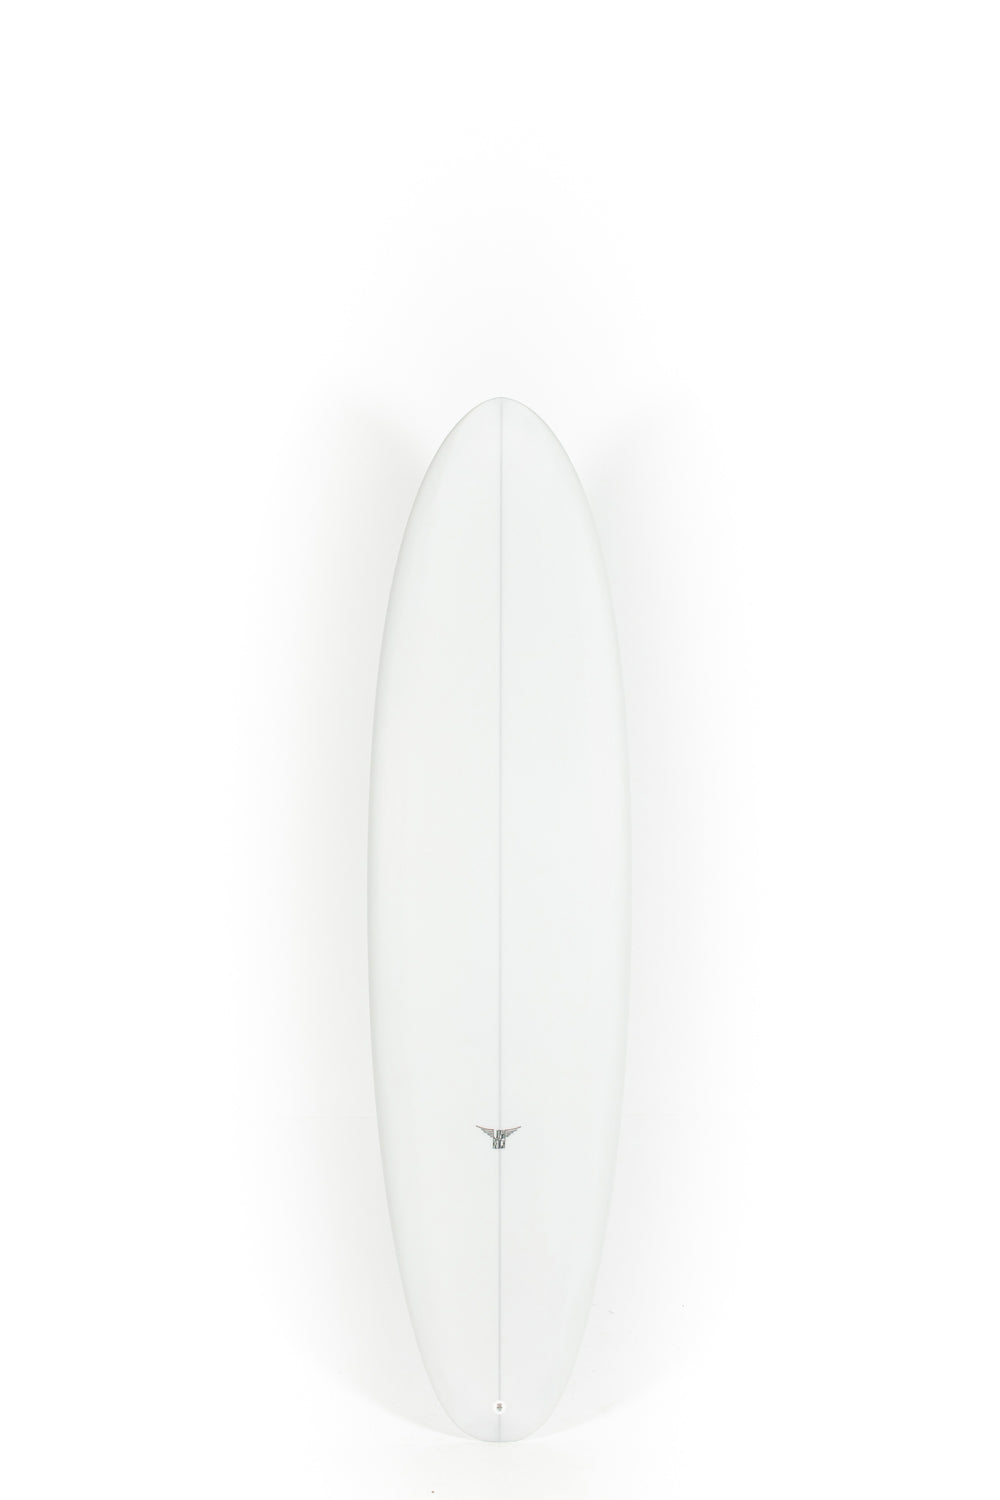 Pukas Surf Shop - Joshua Keogh Surfboard - LIBERATOR TWIN by Joshua Keogh - 6'10